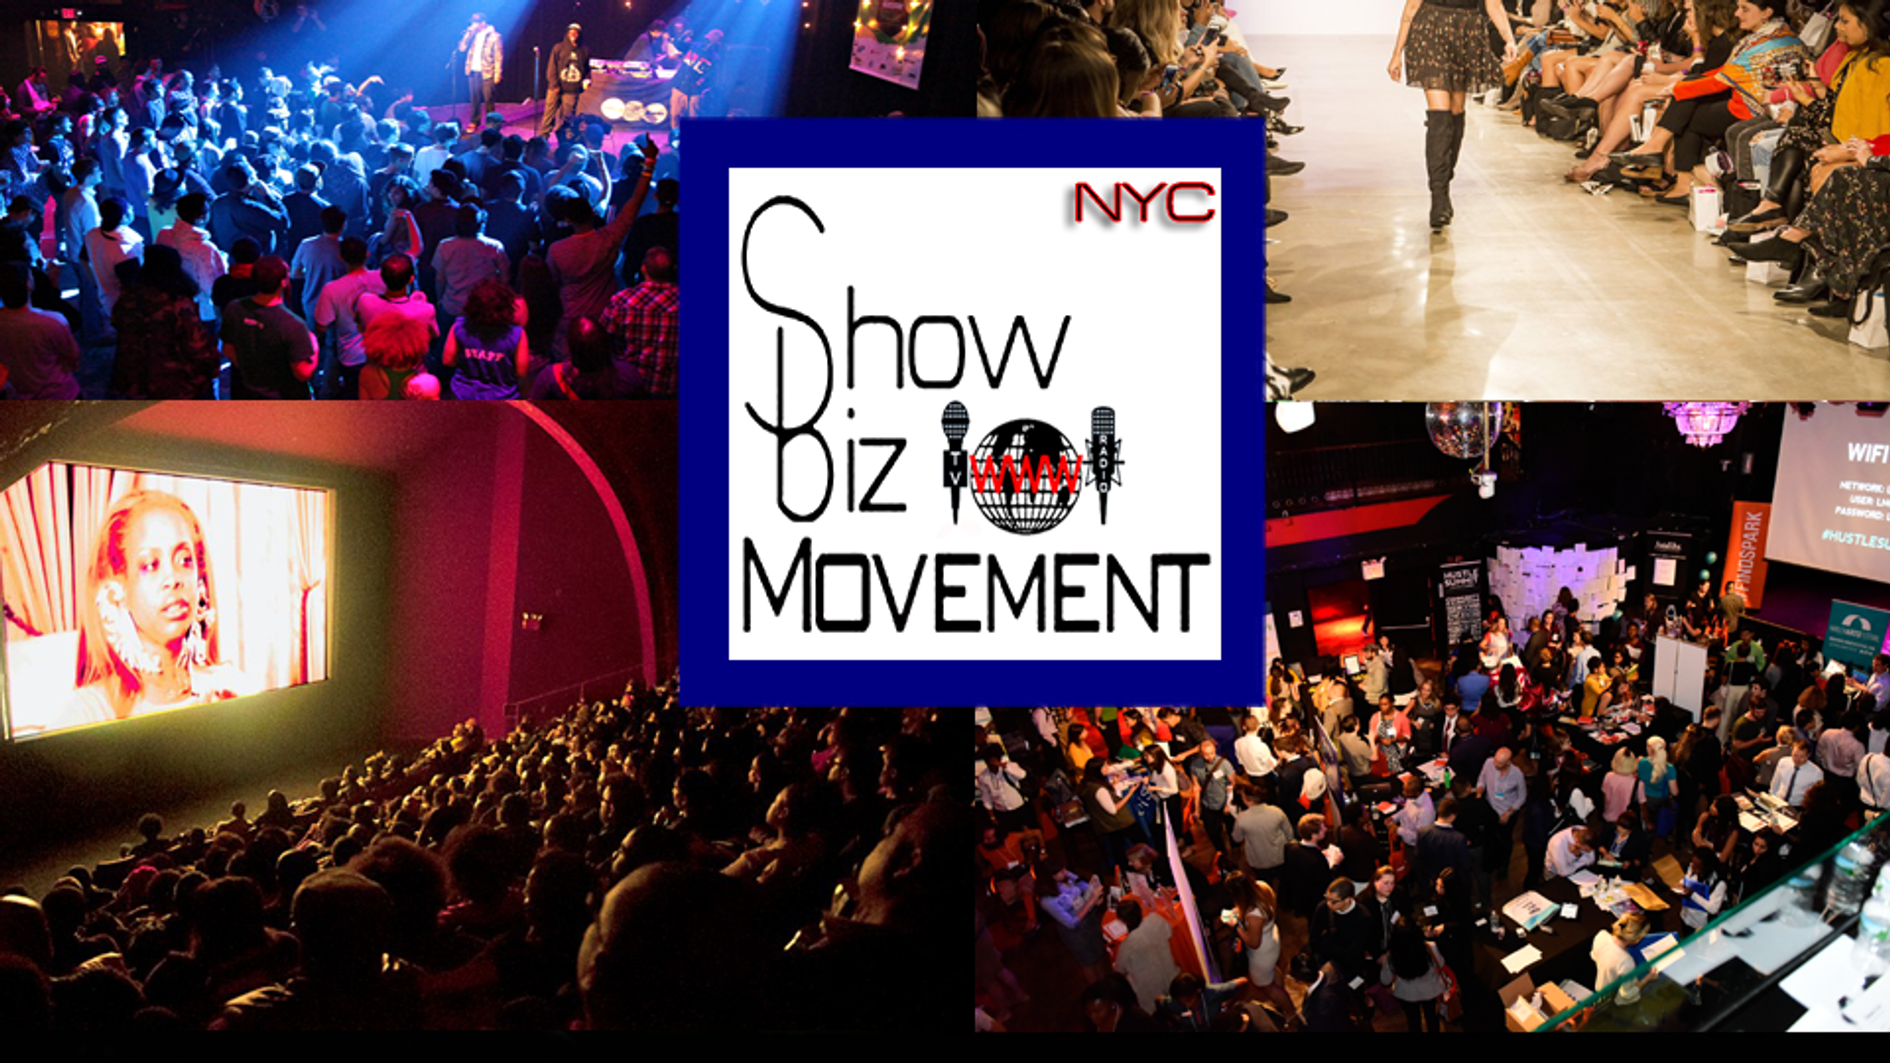 The ShowBiz Movement- NYC